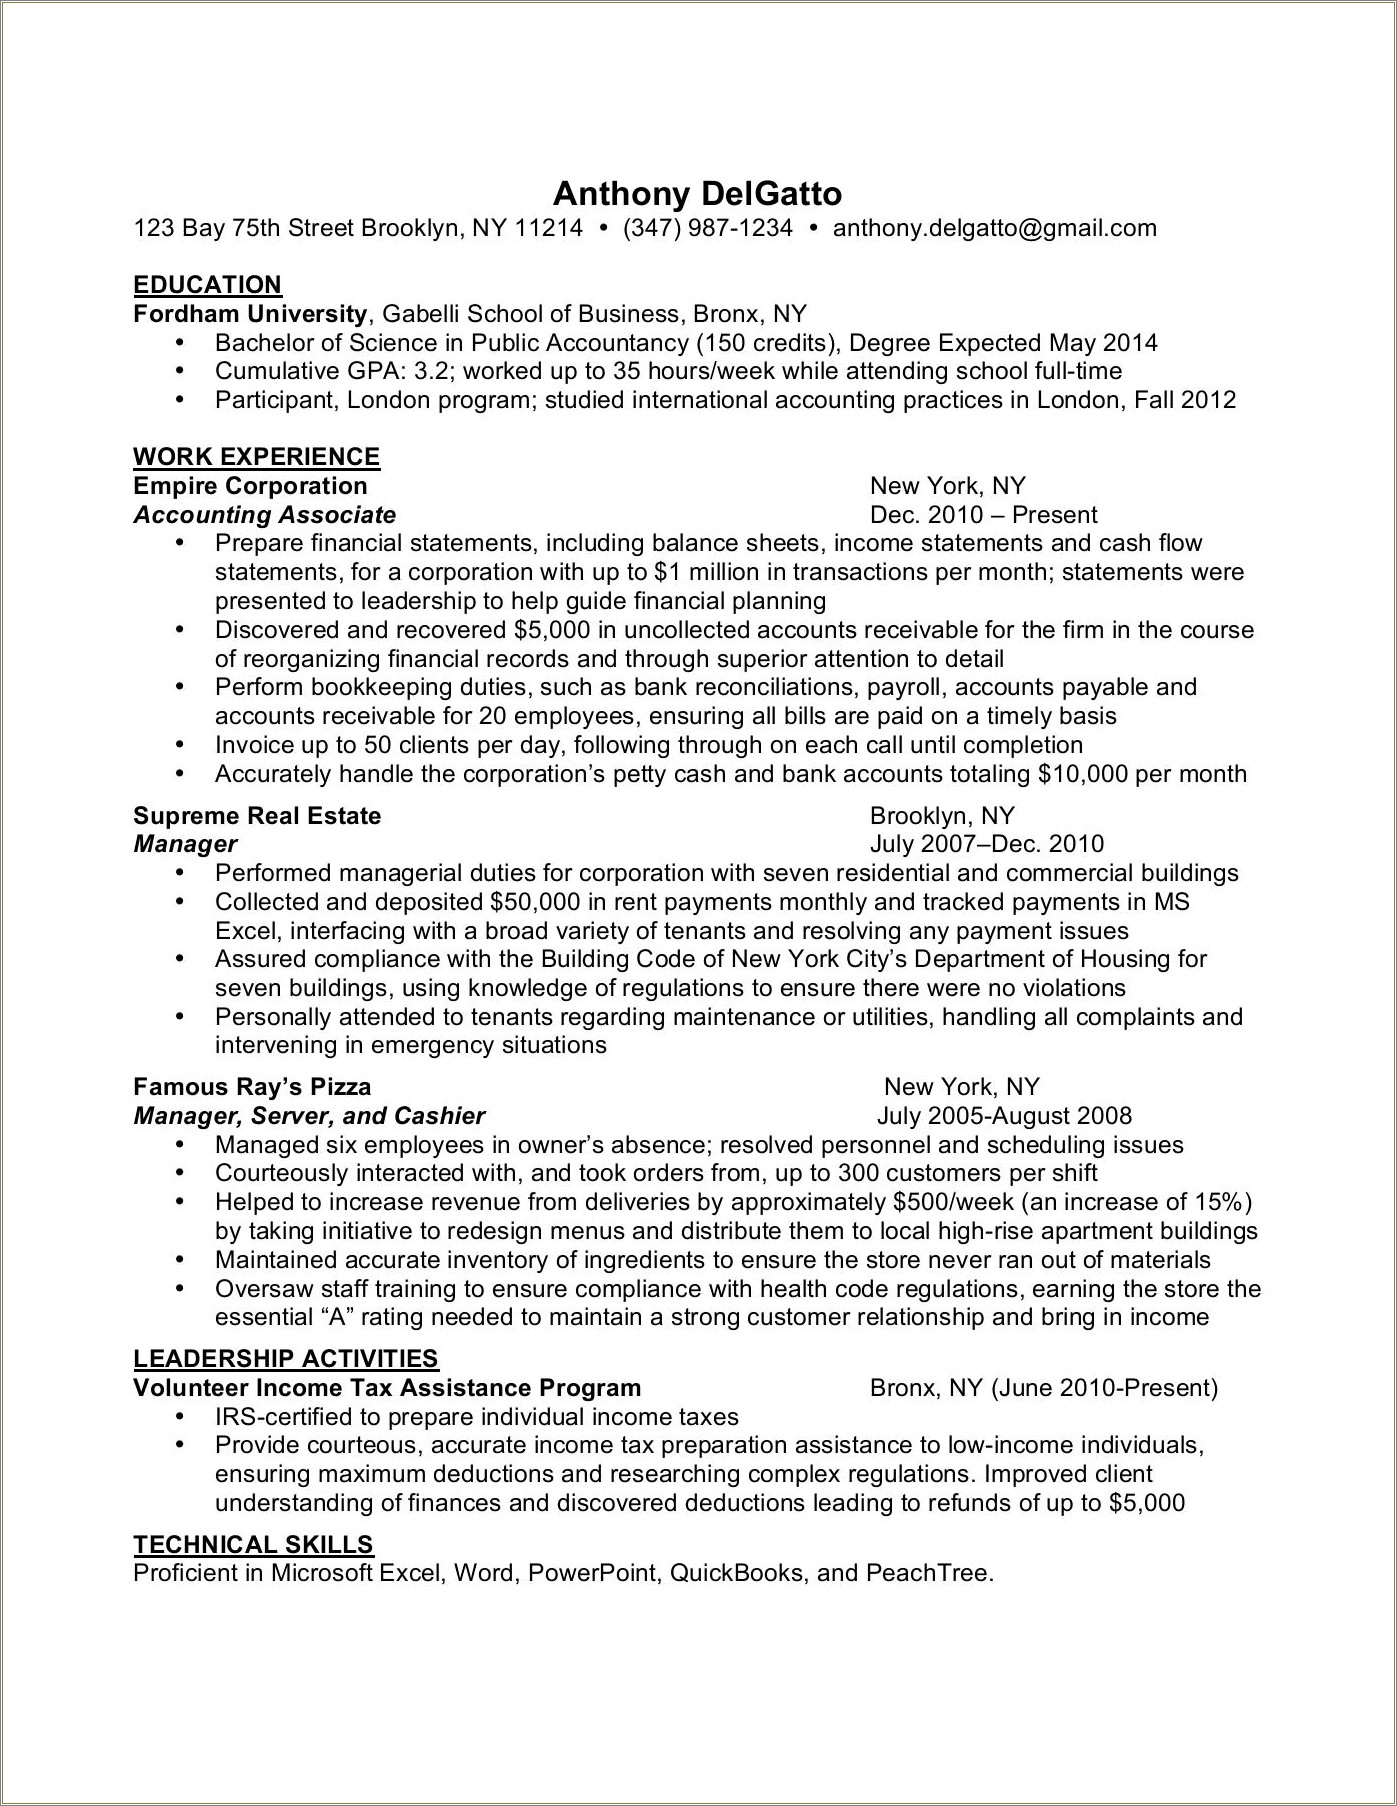 Indiana University Kelley School Of Business Resume Template Resume